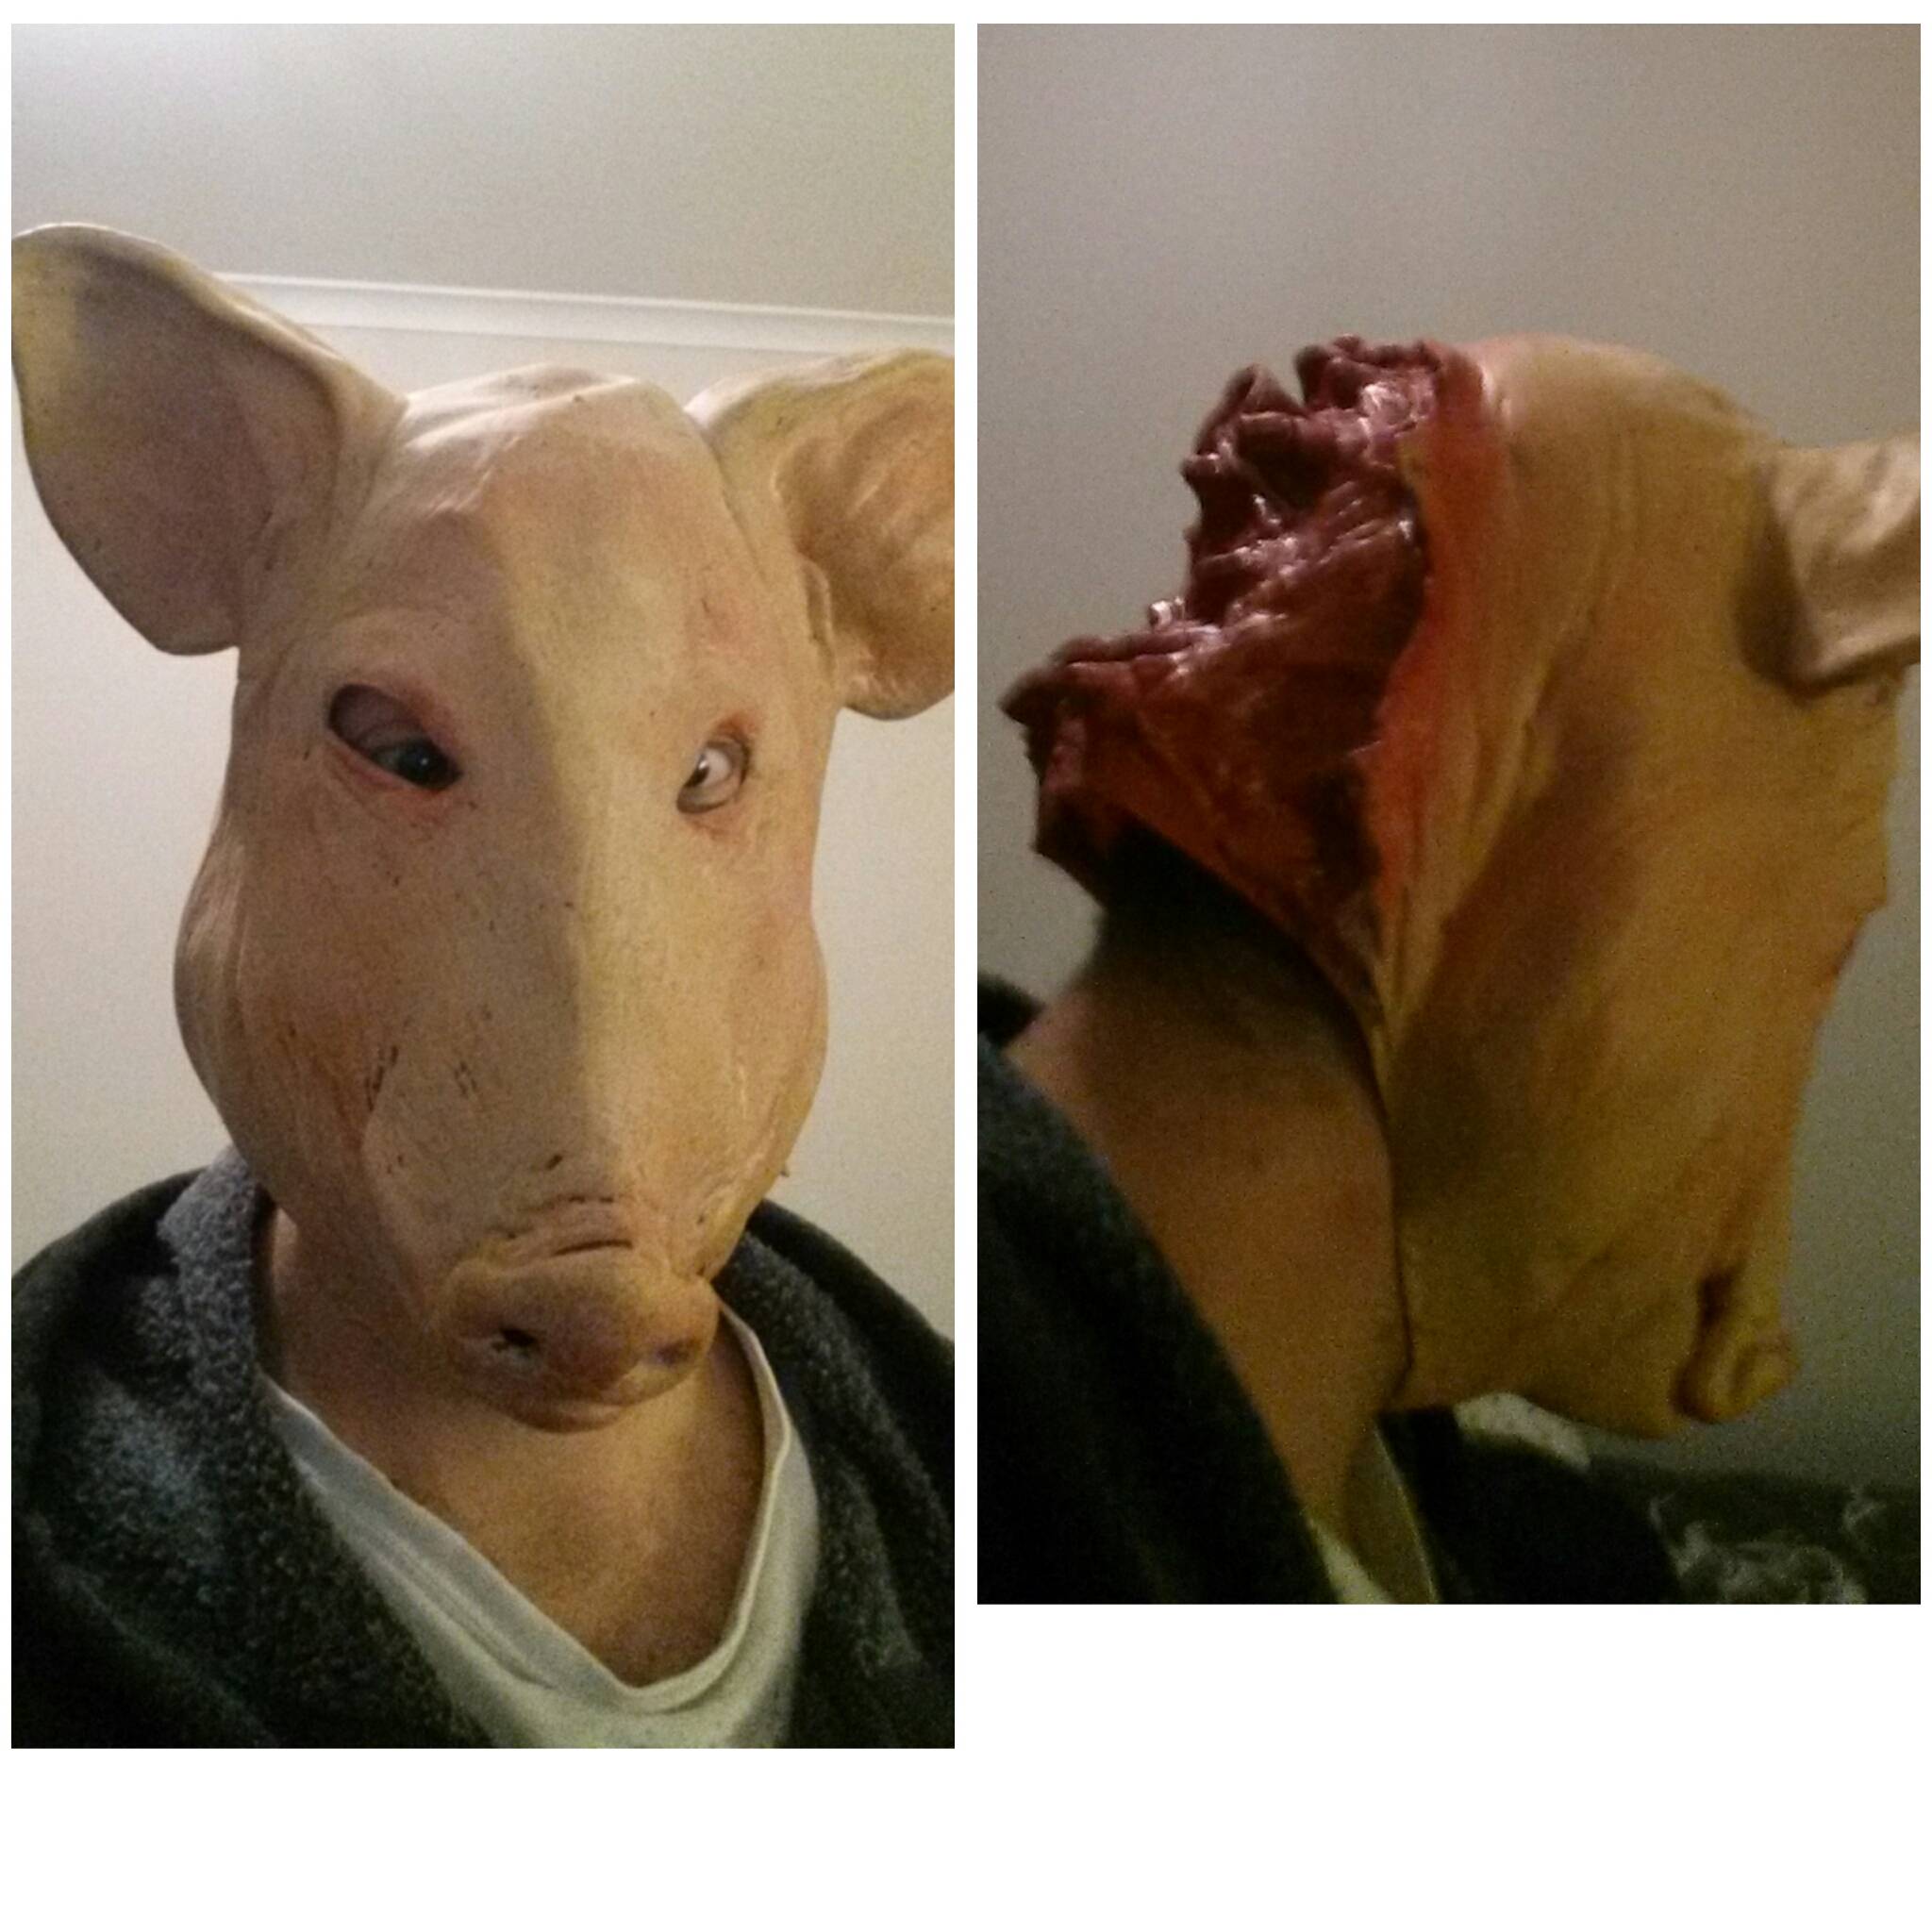 hotline miami pig mask